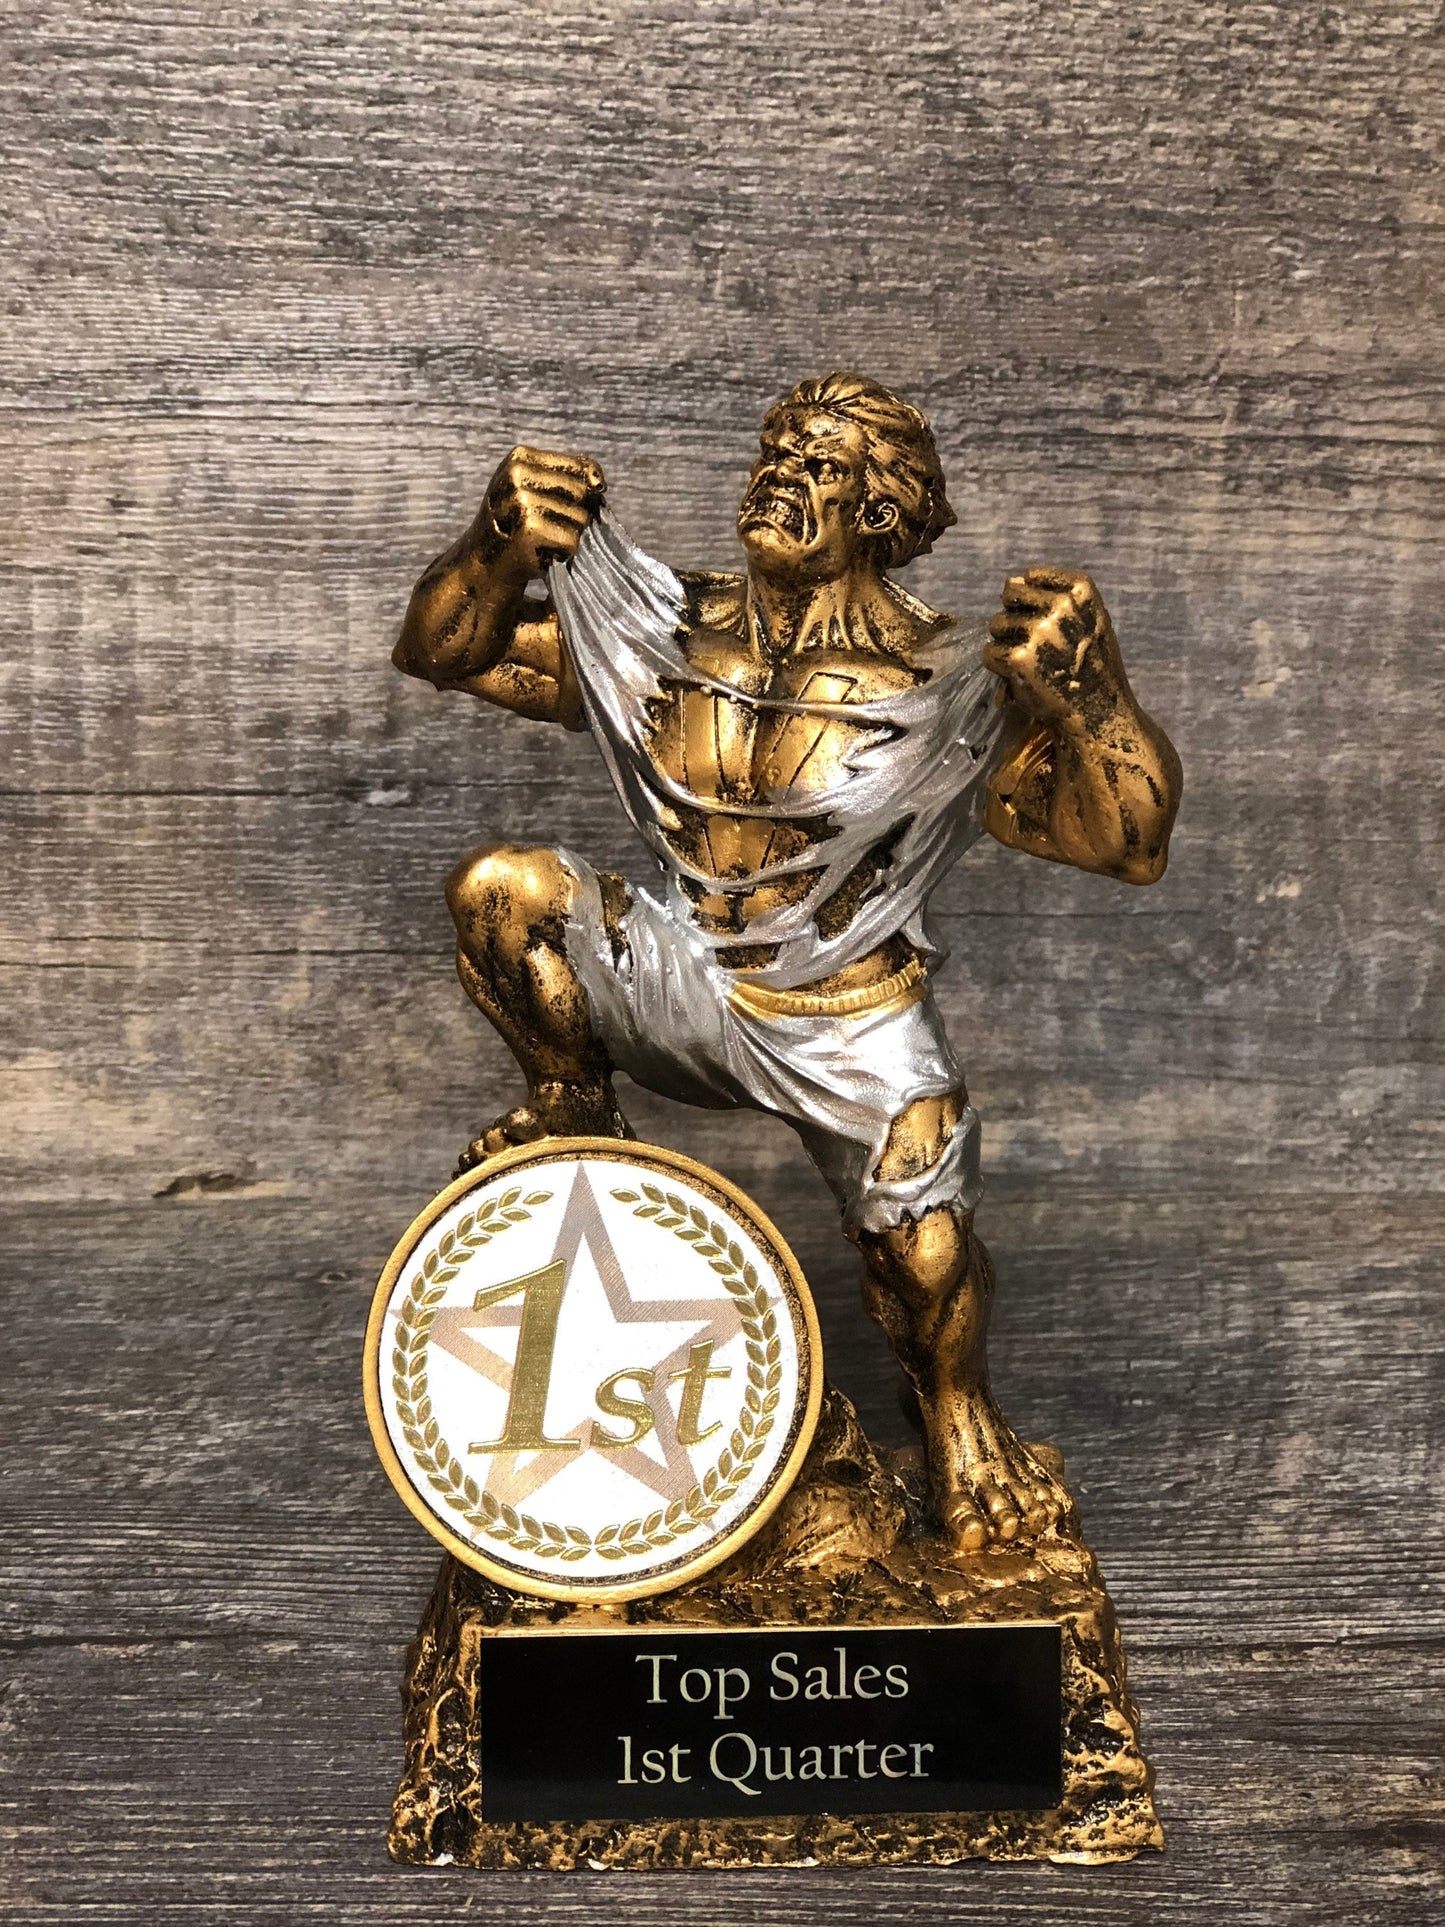 Achievement Award Trophy Personalized Employee Of The Month Beast Top Sales Trophy #1 Salesman Appreciation Award